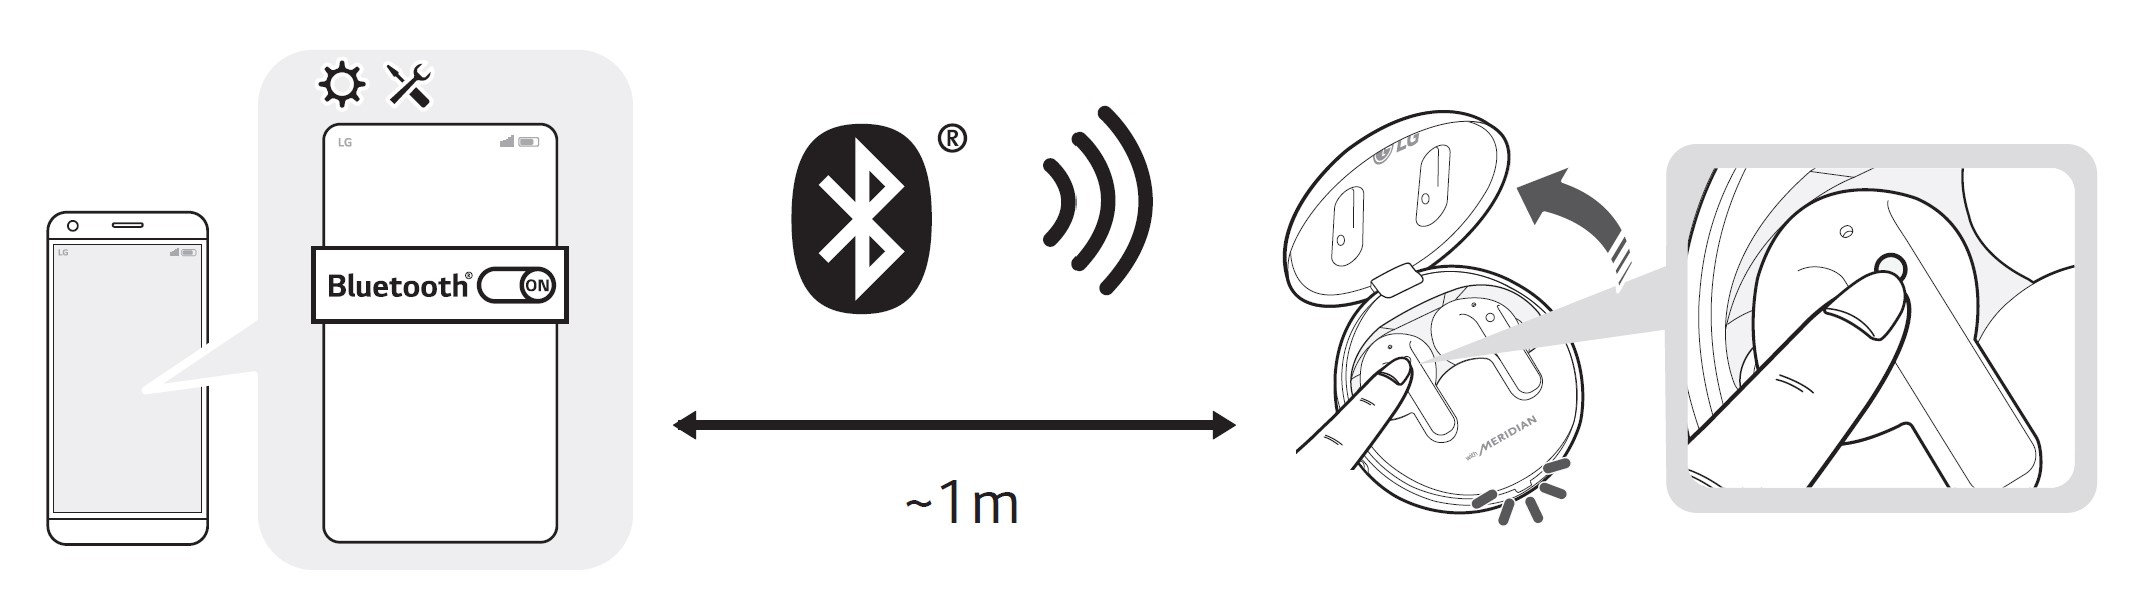 LG-Tone-Free-T90-Wireless-Bluetooth-Earbuds-User-Manual-1